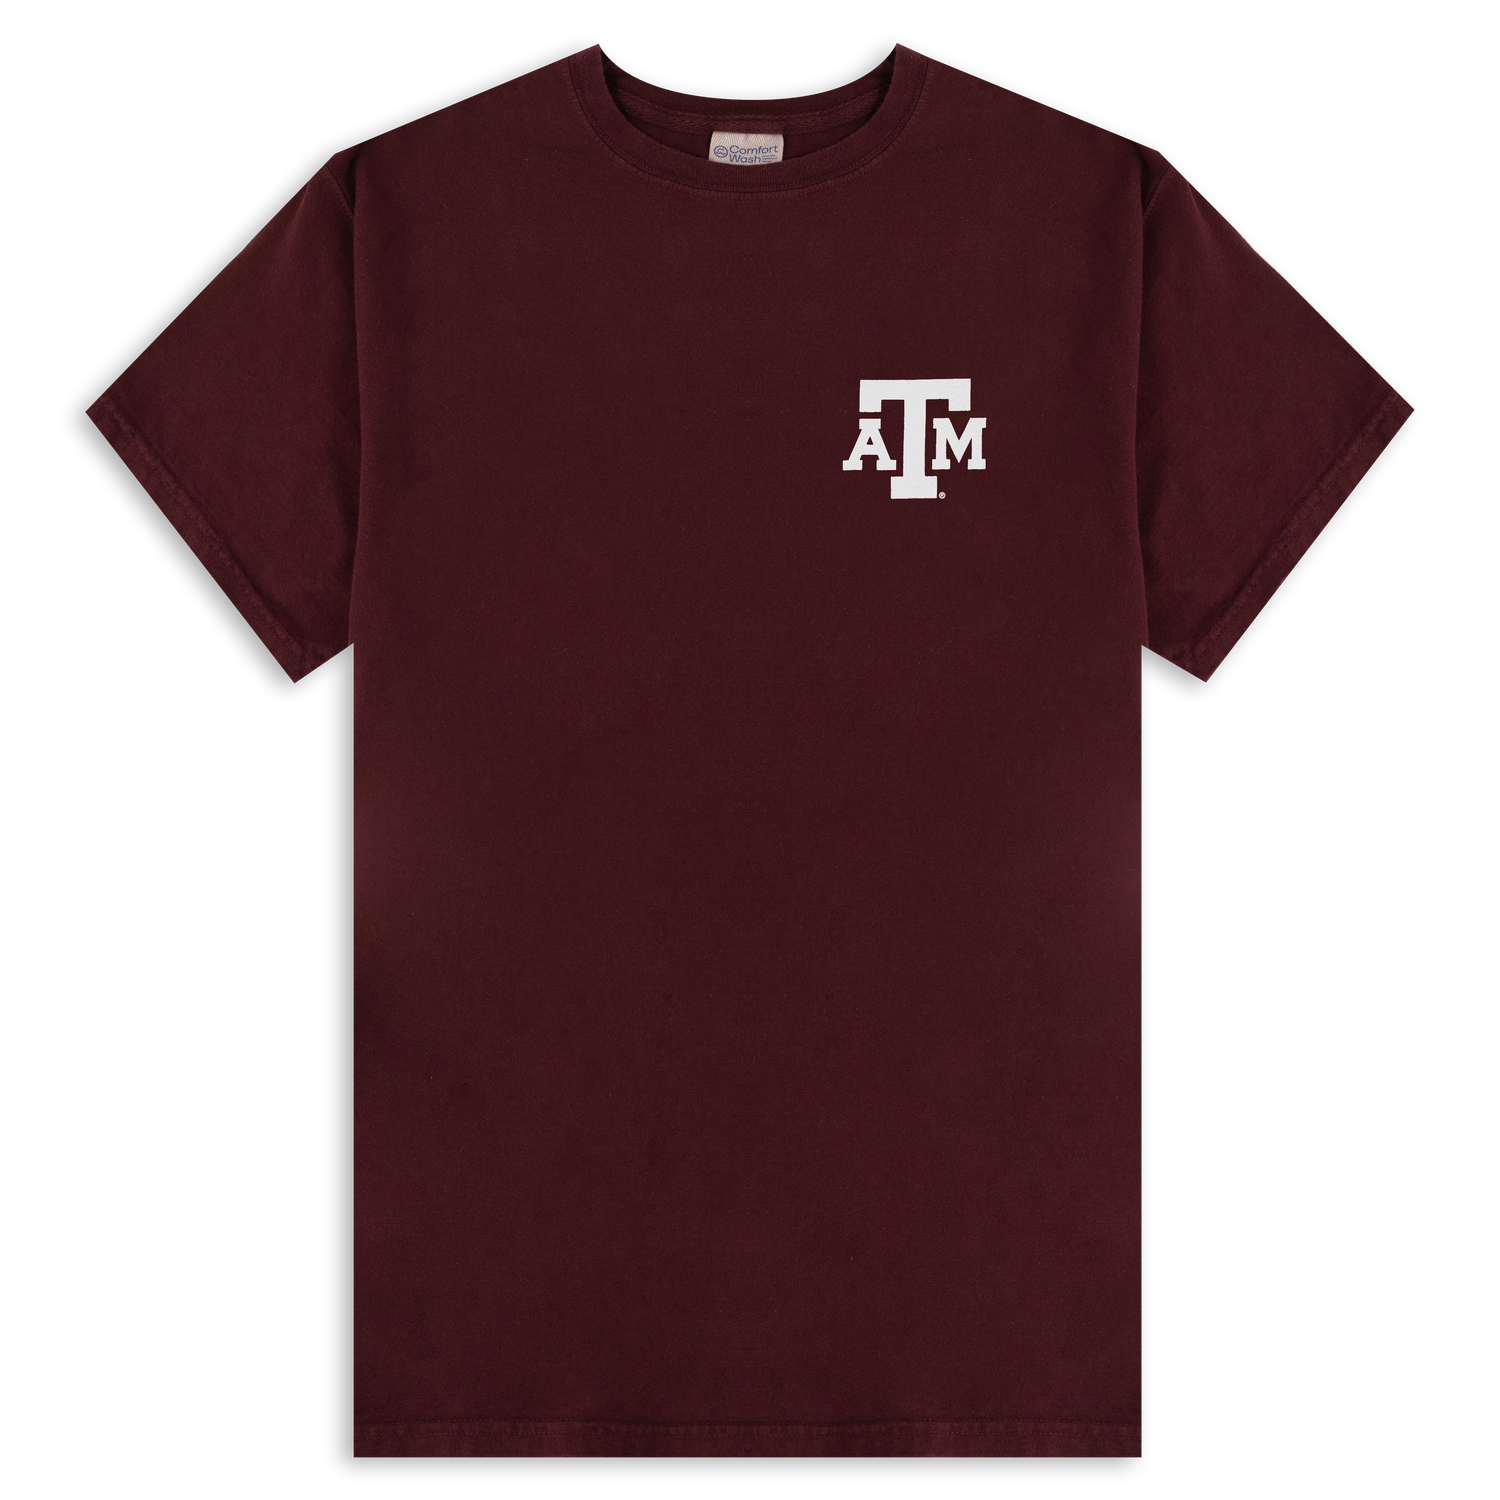 Texas A&M Skyline Grandpa T-Shirt